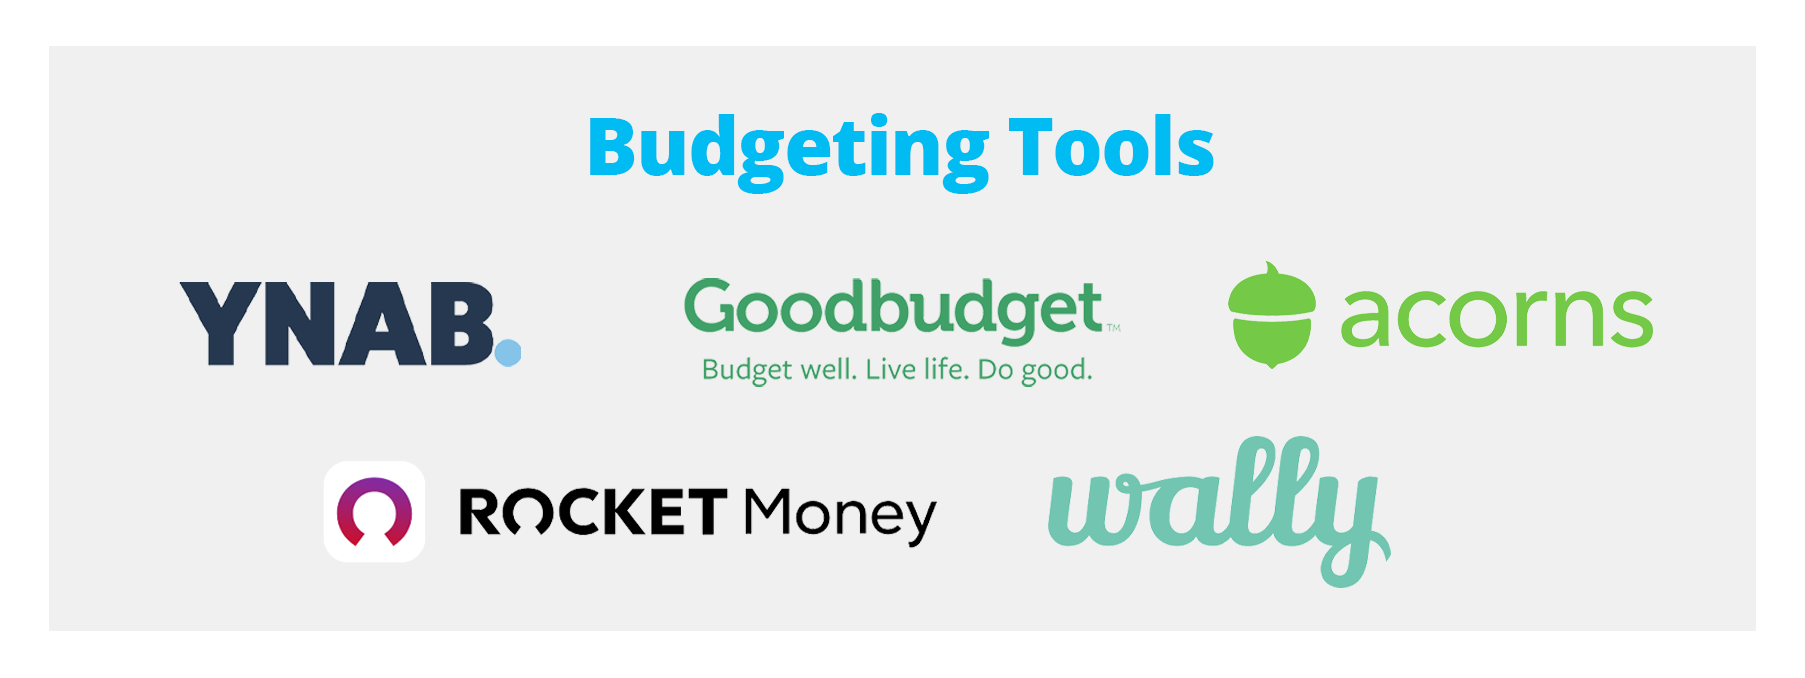 Budgeting tools